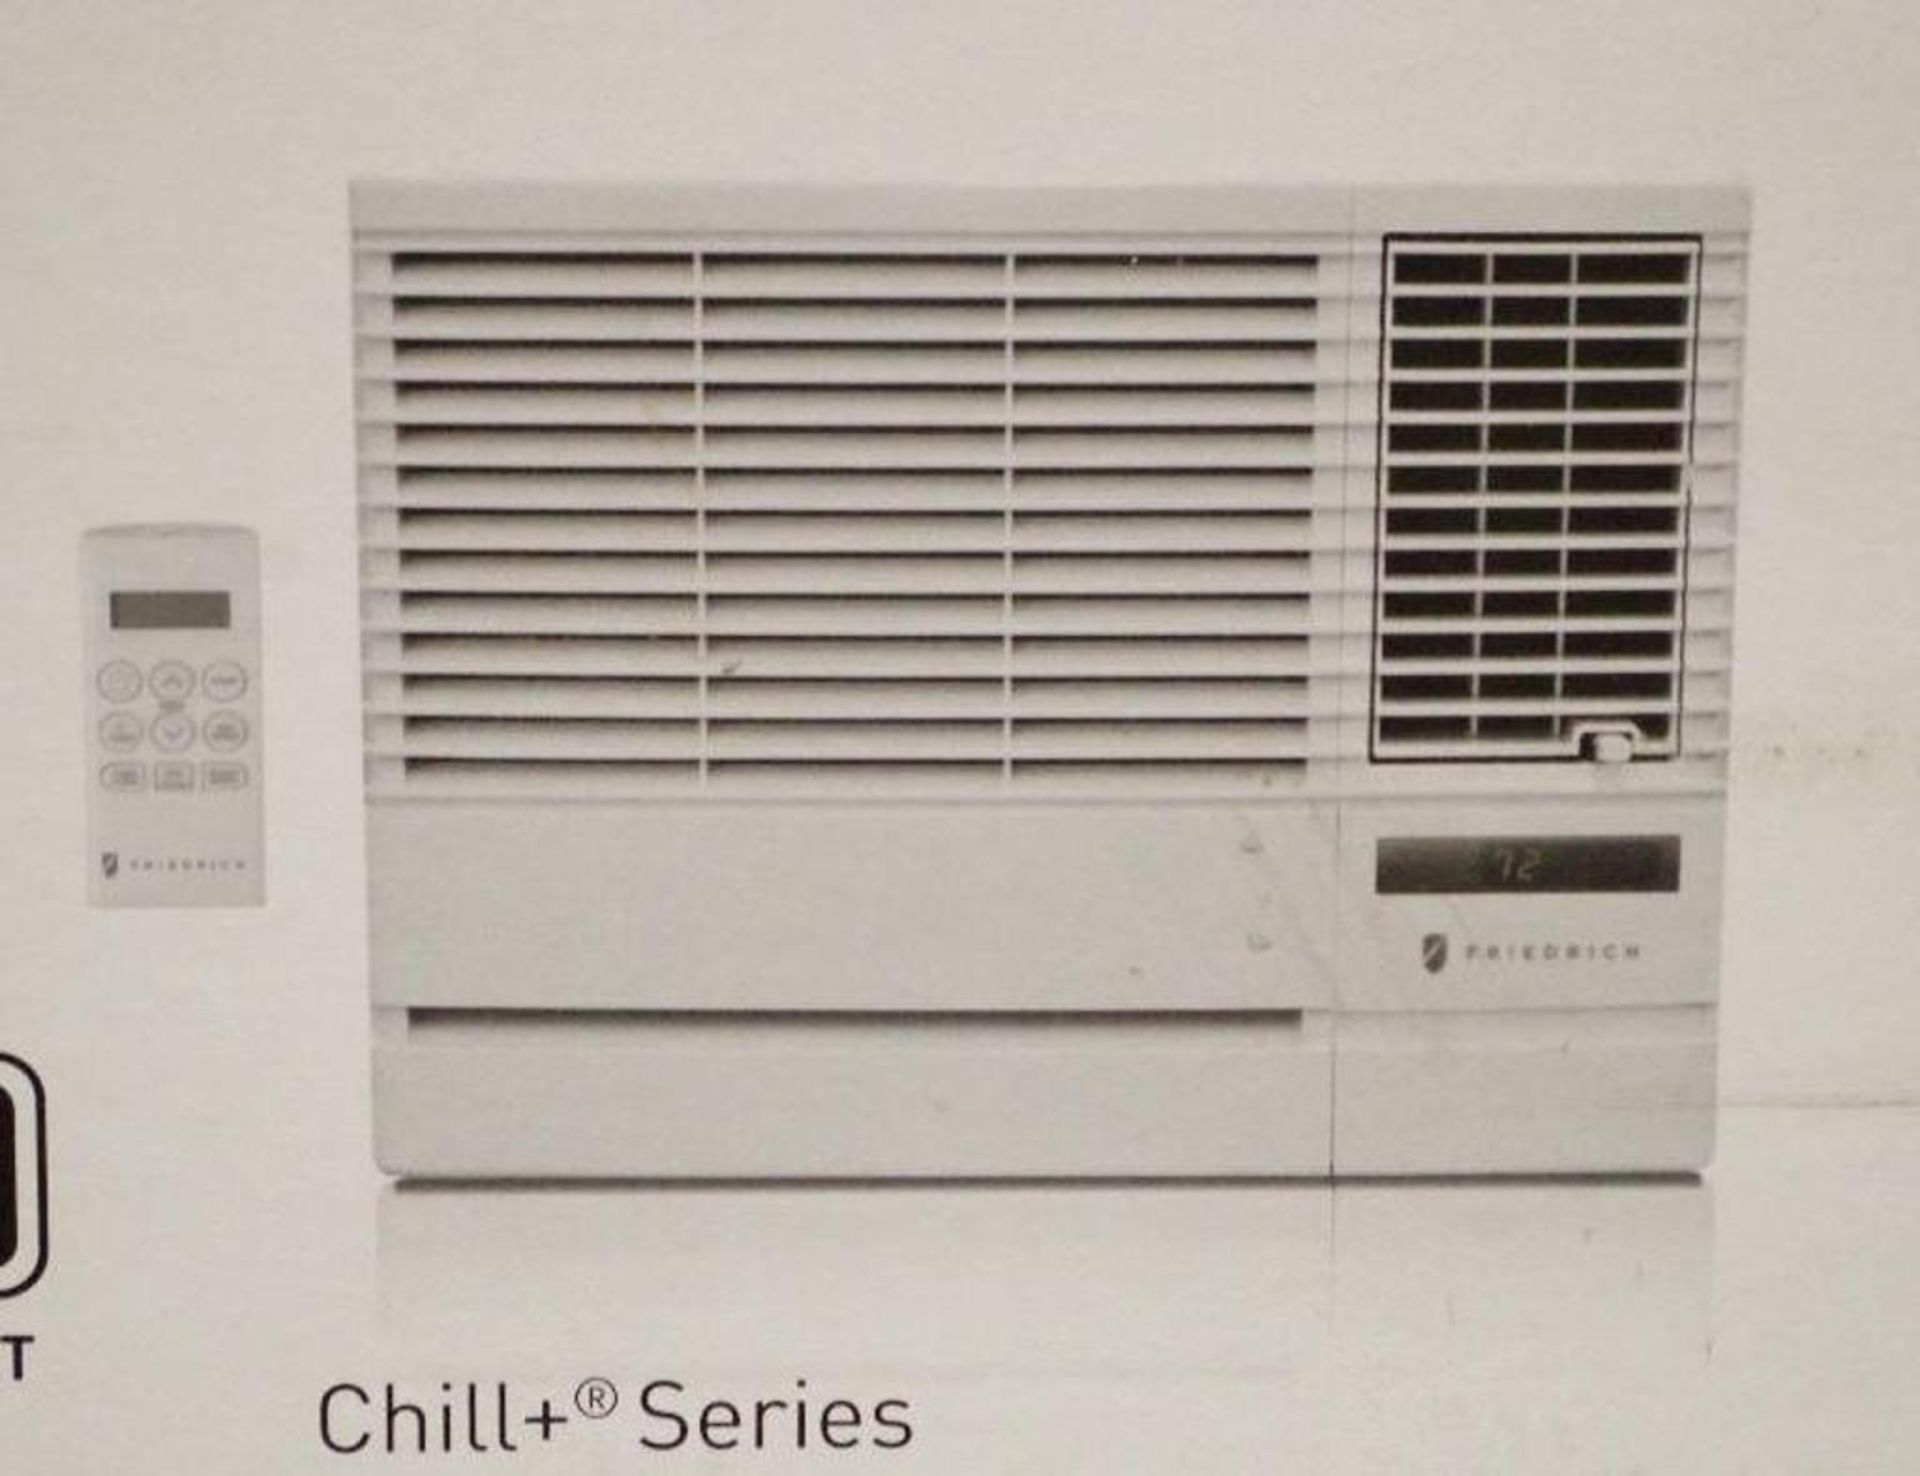 FRIEDRICH Electric Window Air Conditioner w/ Heat M/N EP08G11 - Image 6 of 7